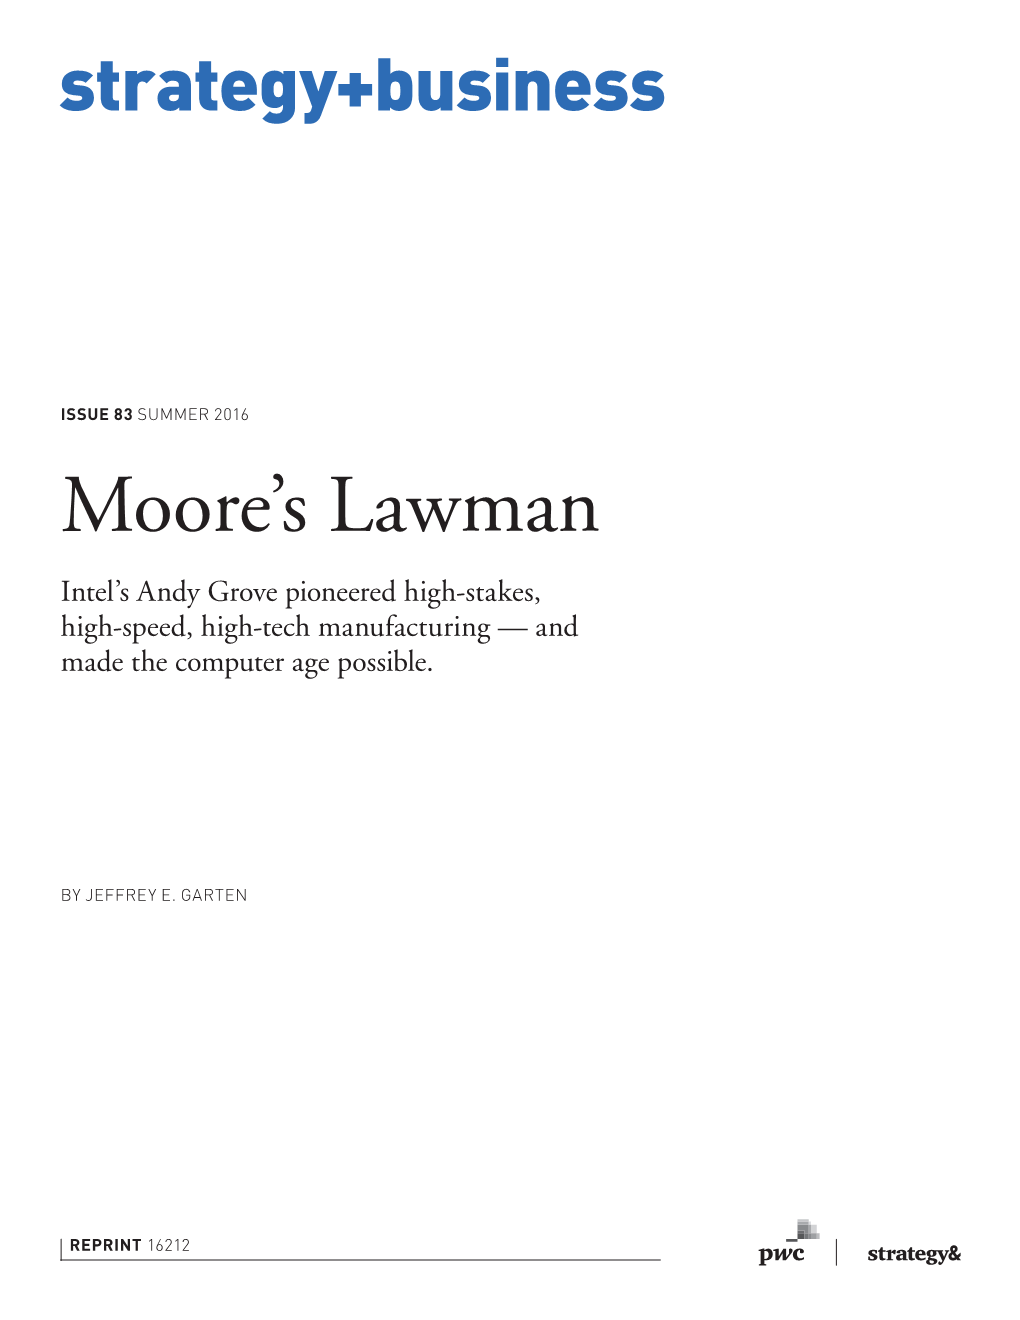 Moore's Lawman